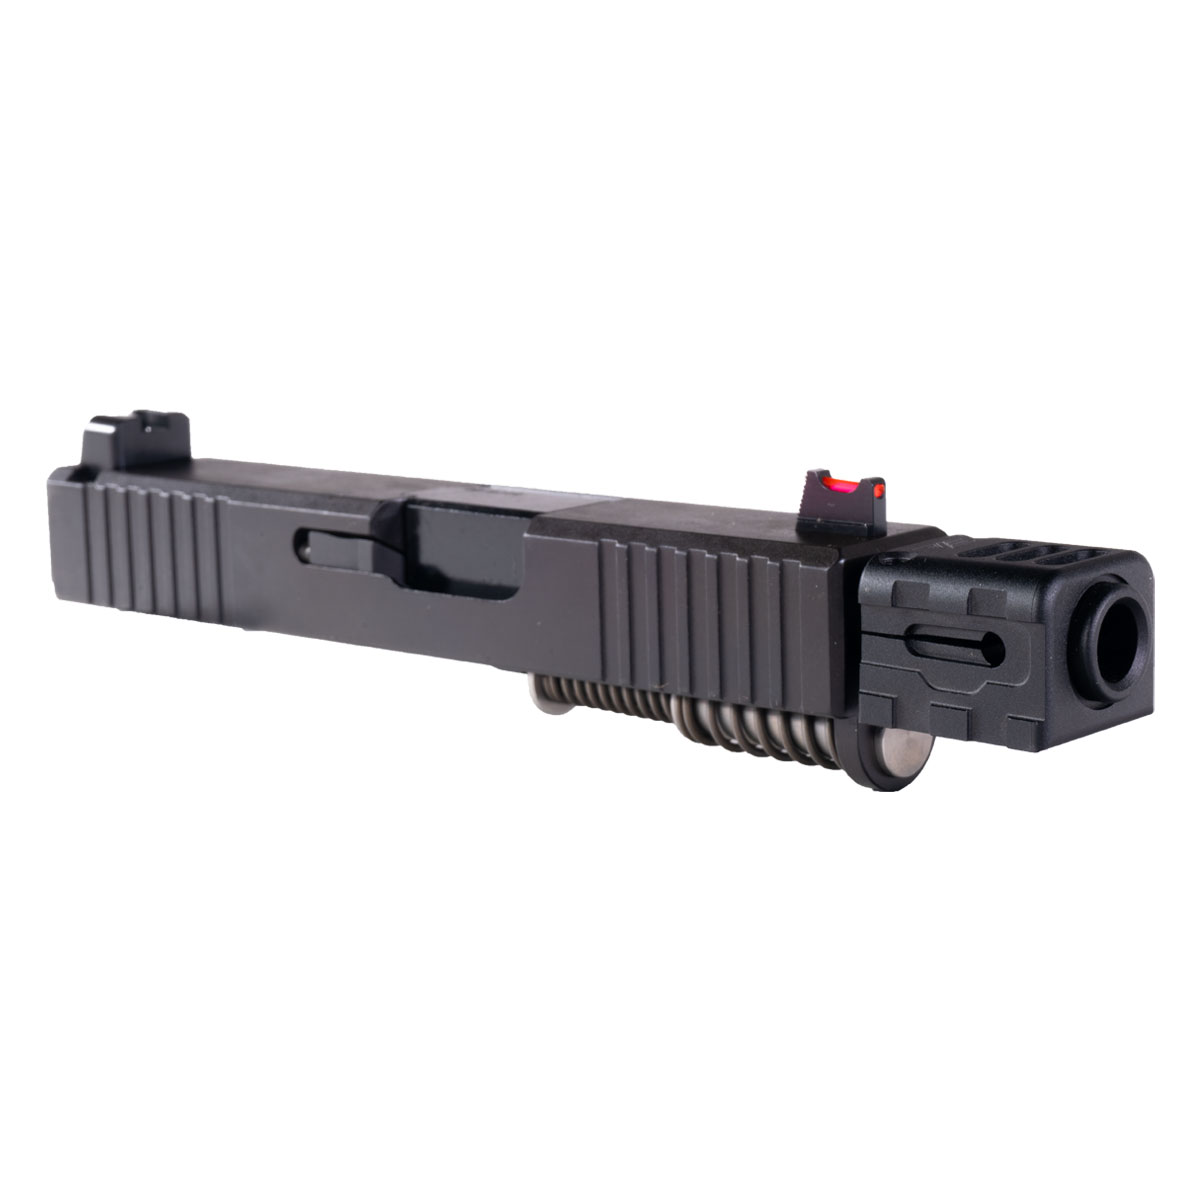 DD 'Pyknic w/ Sylvan Arms Compensator' 9mm Complete Slide Kit - Glock 26 Gen 1-2 Compatible